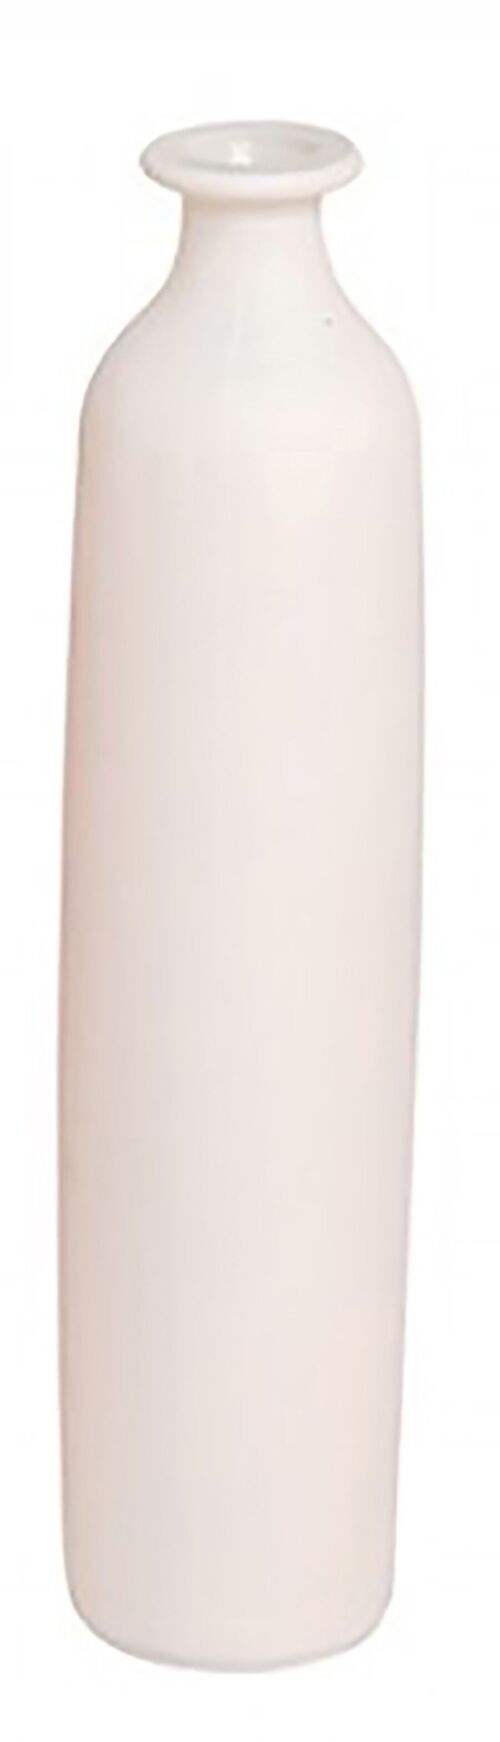 Modern glass vase in white. Origin: Spain Dimension: 5x25cm EE-013W